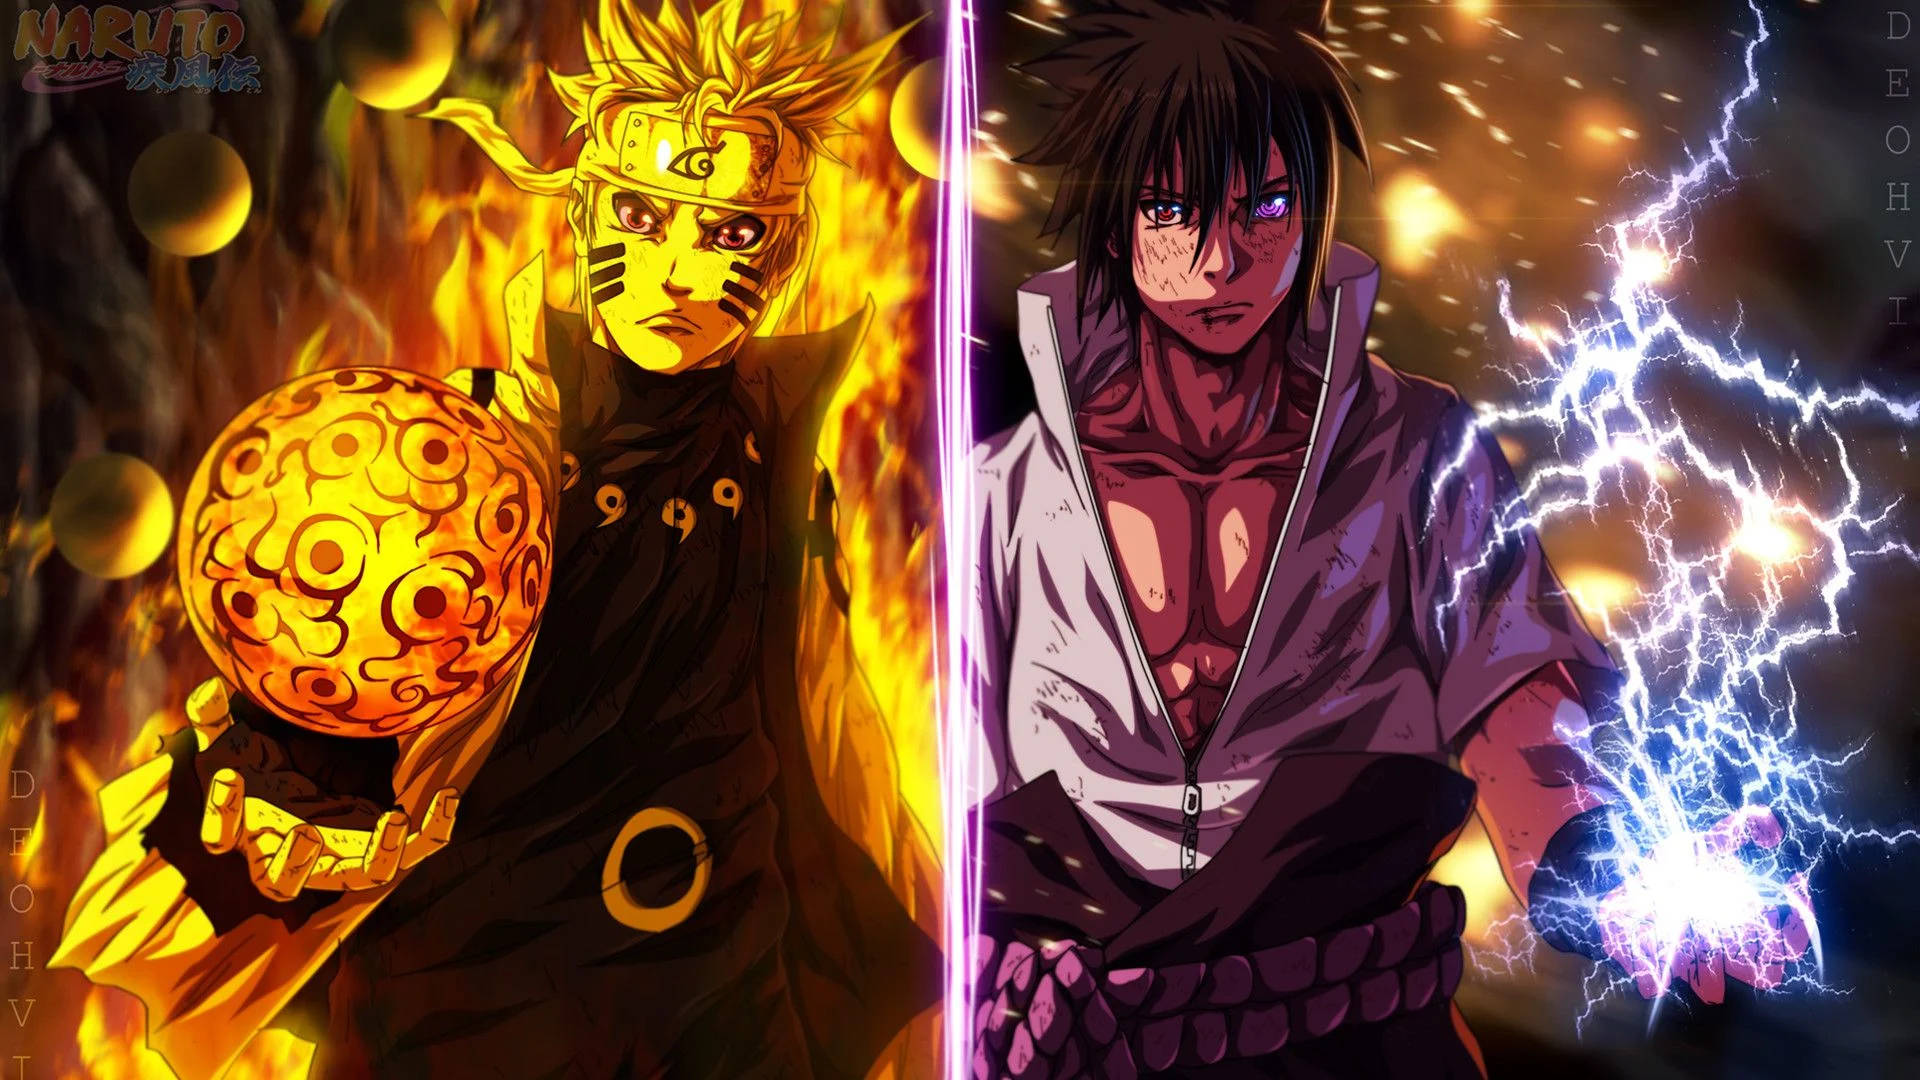 Top 999+ Naruto And Sasuke Wallpaper Full HD, 4K✅Free to Use